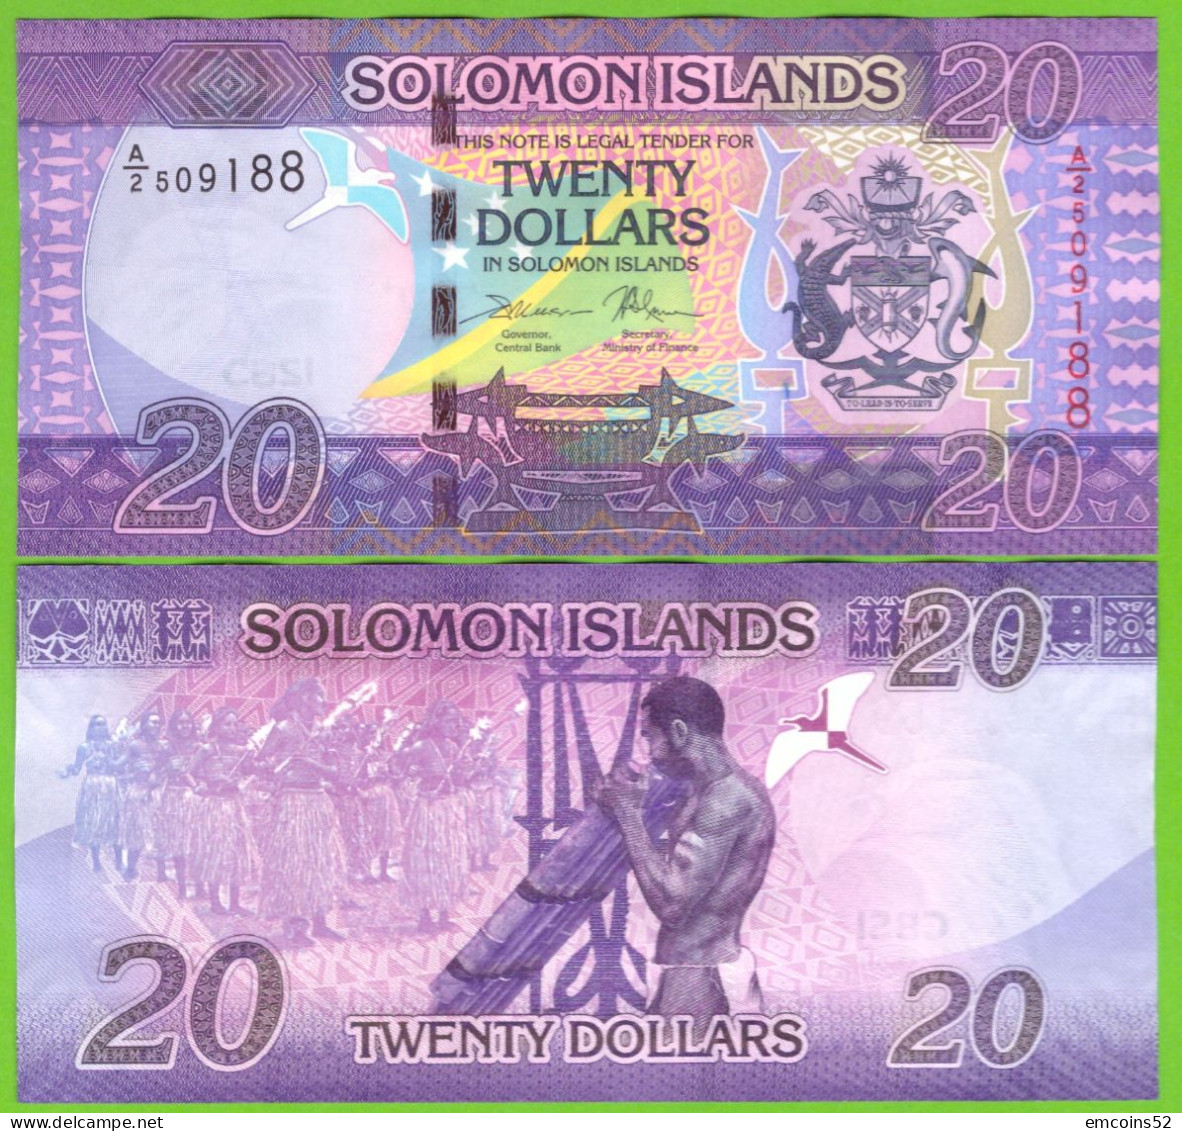 SOLOMON ISLANDS 20 DOLLARS 2017  P-34(1)  UNC - Isla Salomon